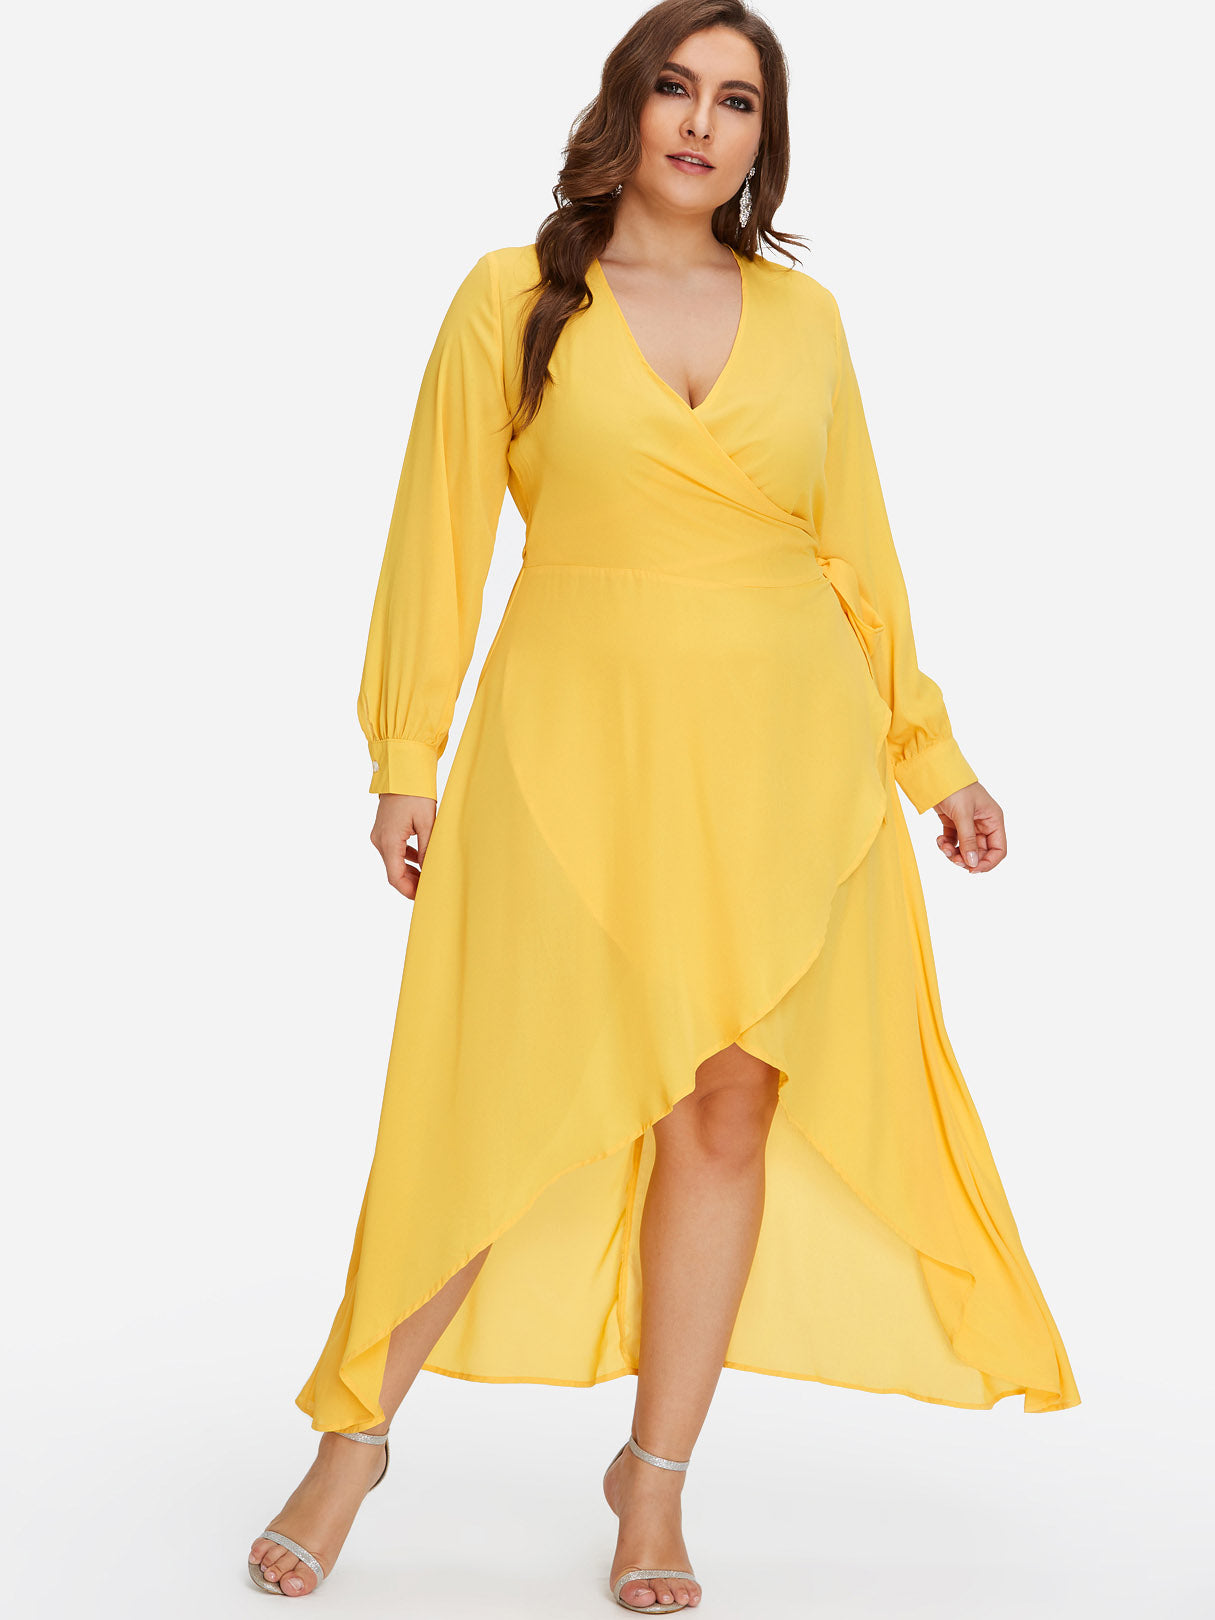 Wholesale V-Neck Plain Self-Tie Wrap Long Sleeve Yellow Plus Size Dress